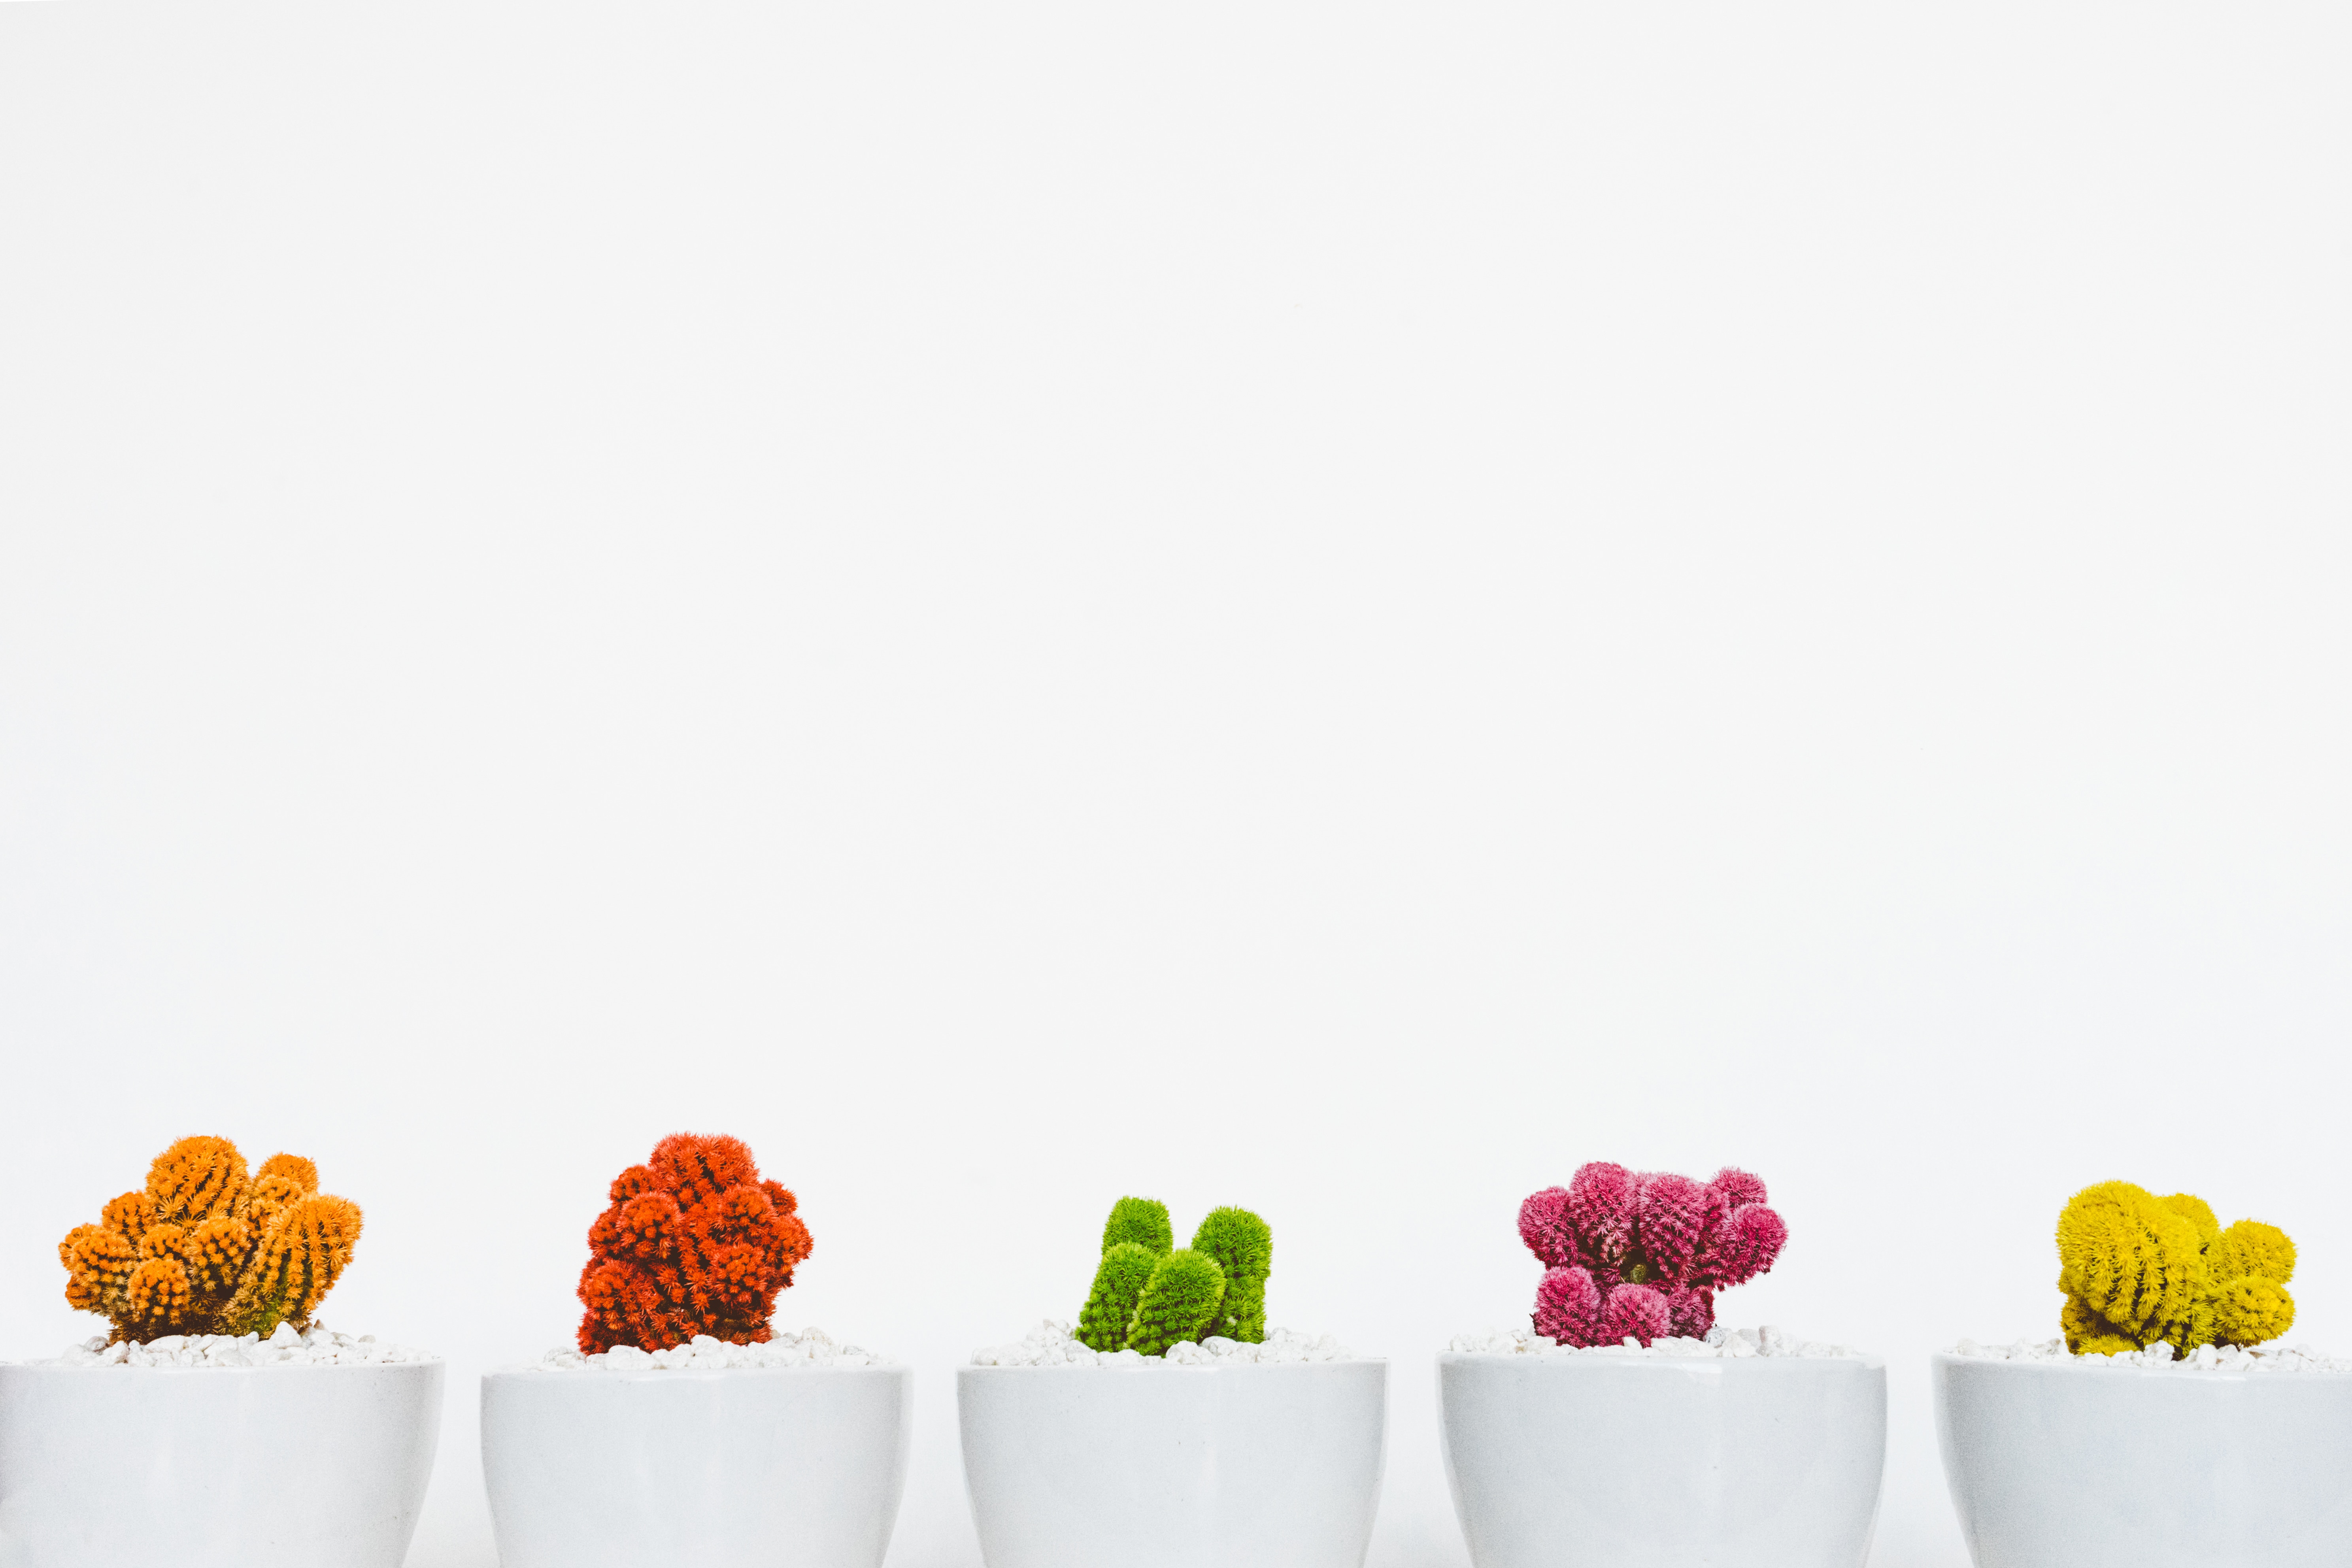 five assorted cactus plants on white ceramic vases